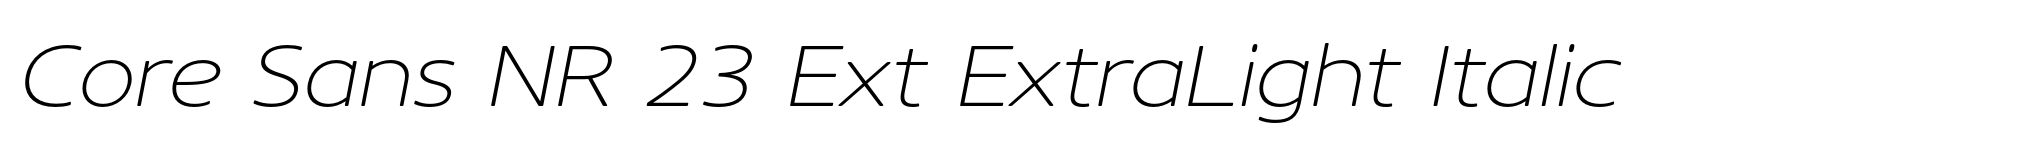 Core Sans NR 23 Ext ExtraLight Italic image